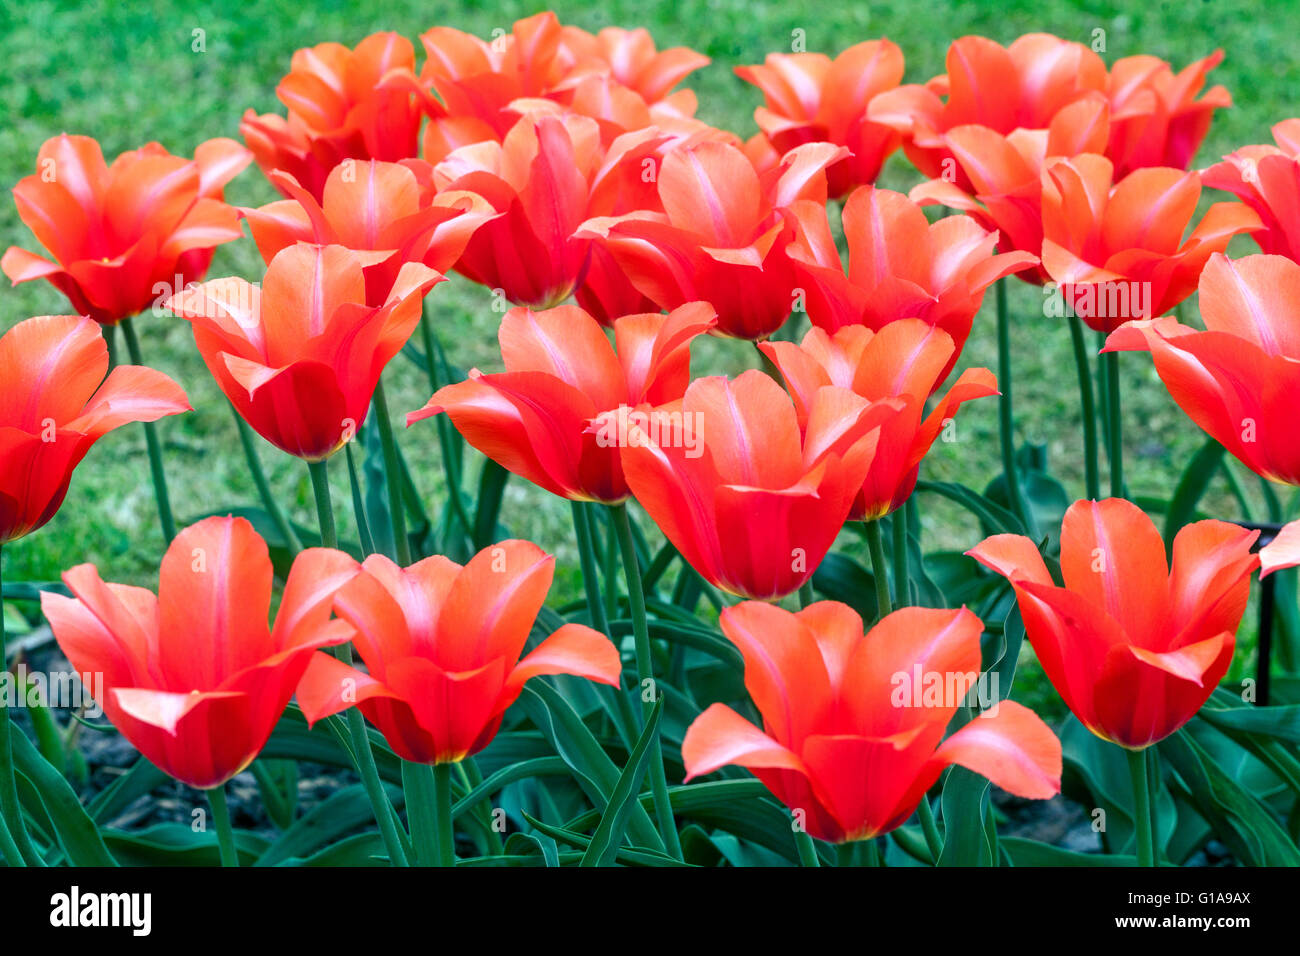 Flowering Tulips Garden, Red Tulipa 'Temple of Beauty', Red Tulips garden Stock Photo